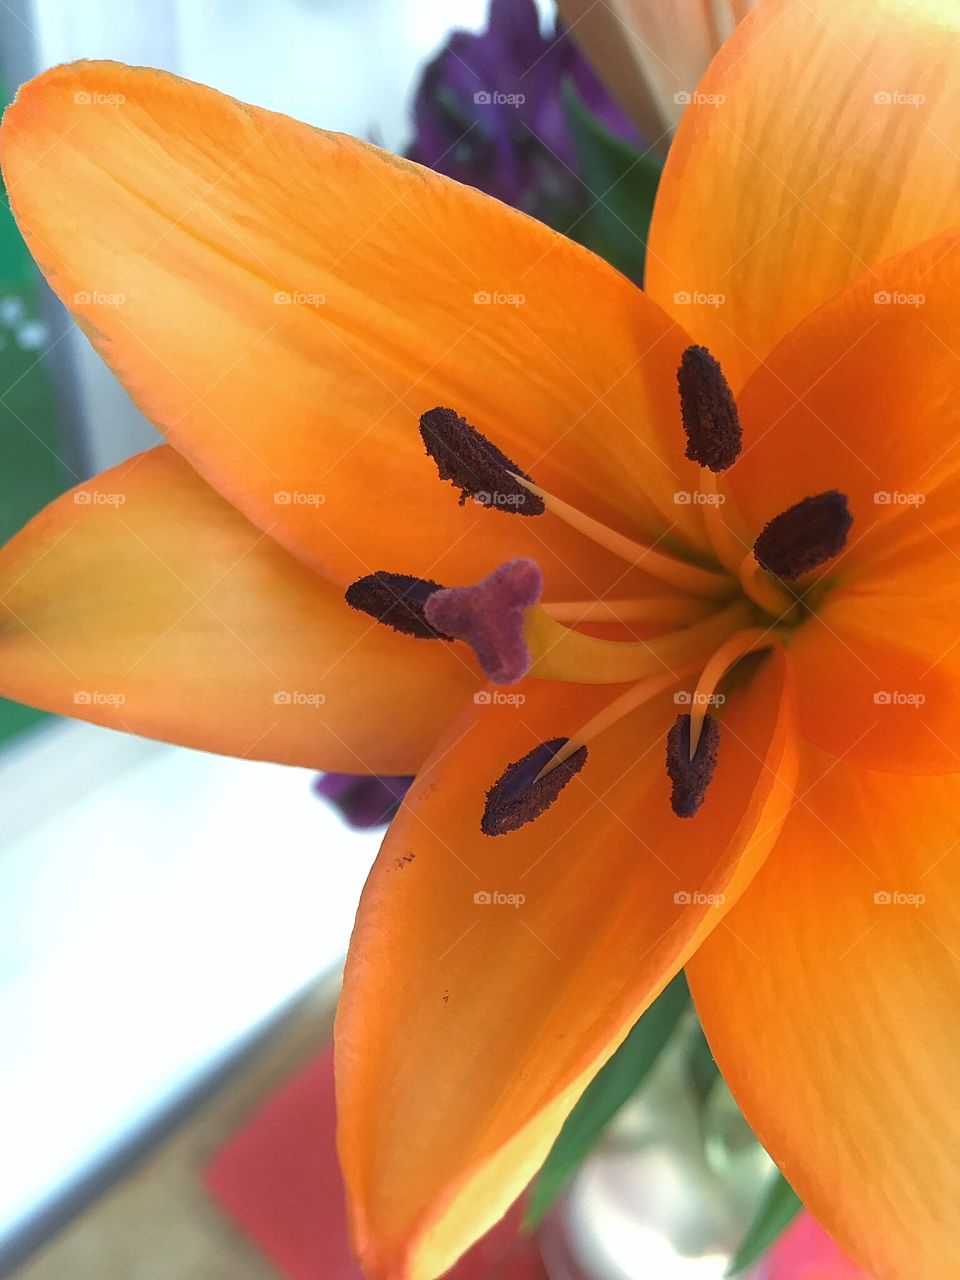 Orange lily 